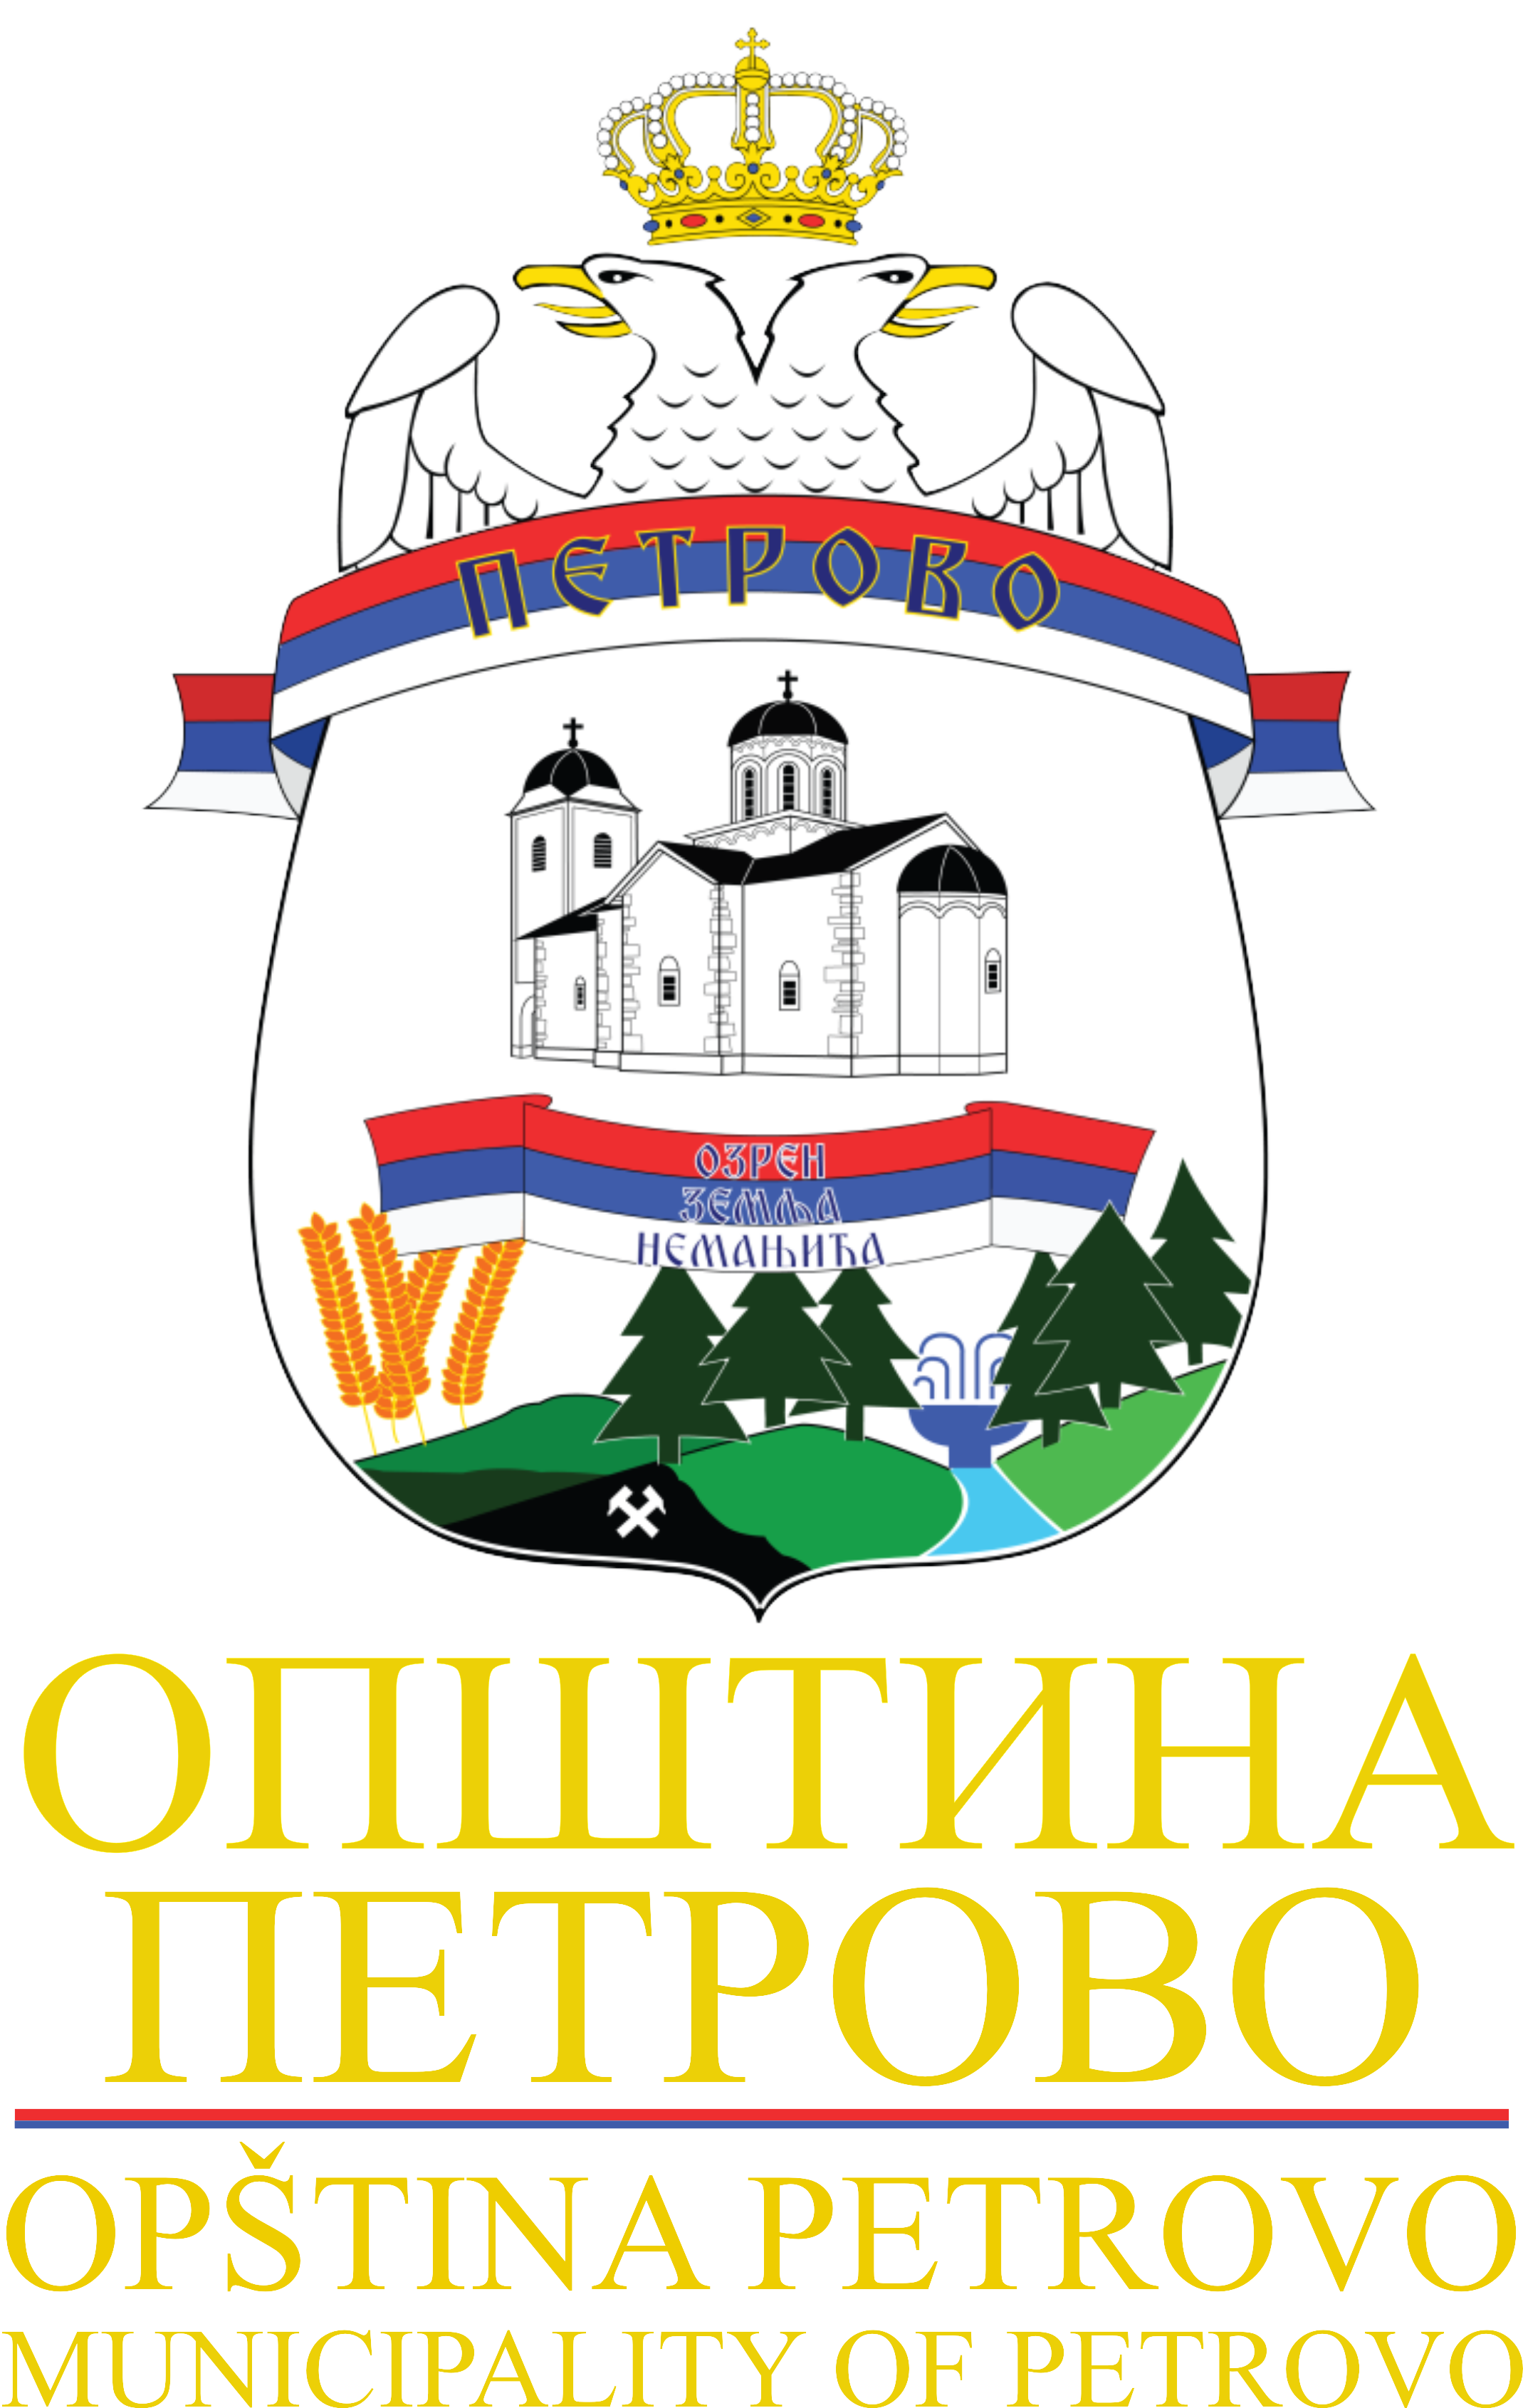 Opština Petrovo